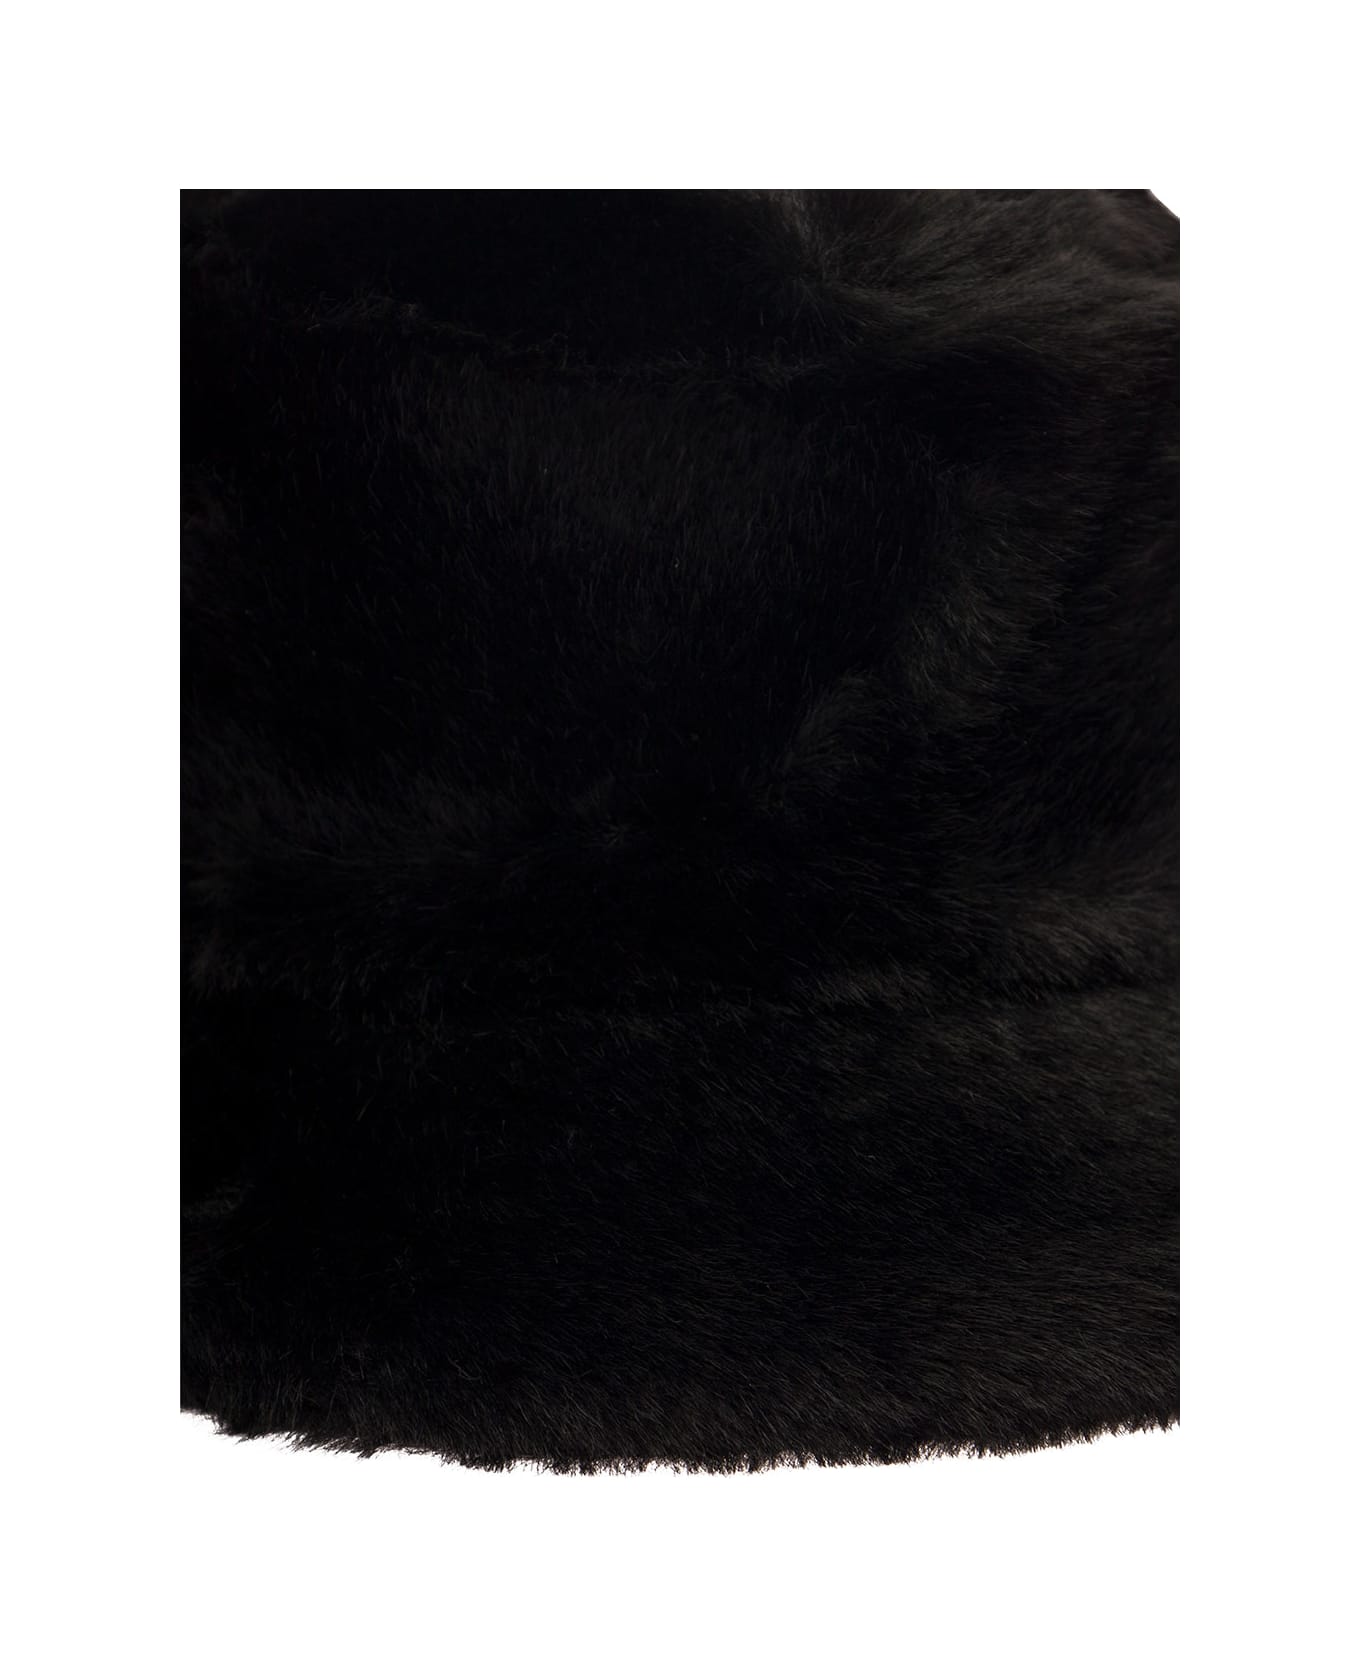 STAND STUDIO 'vera' Black Hat With Low Brim In Faux Fur Woman - Black